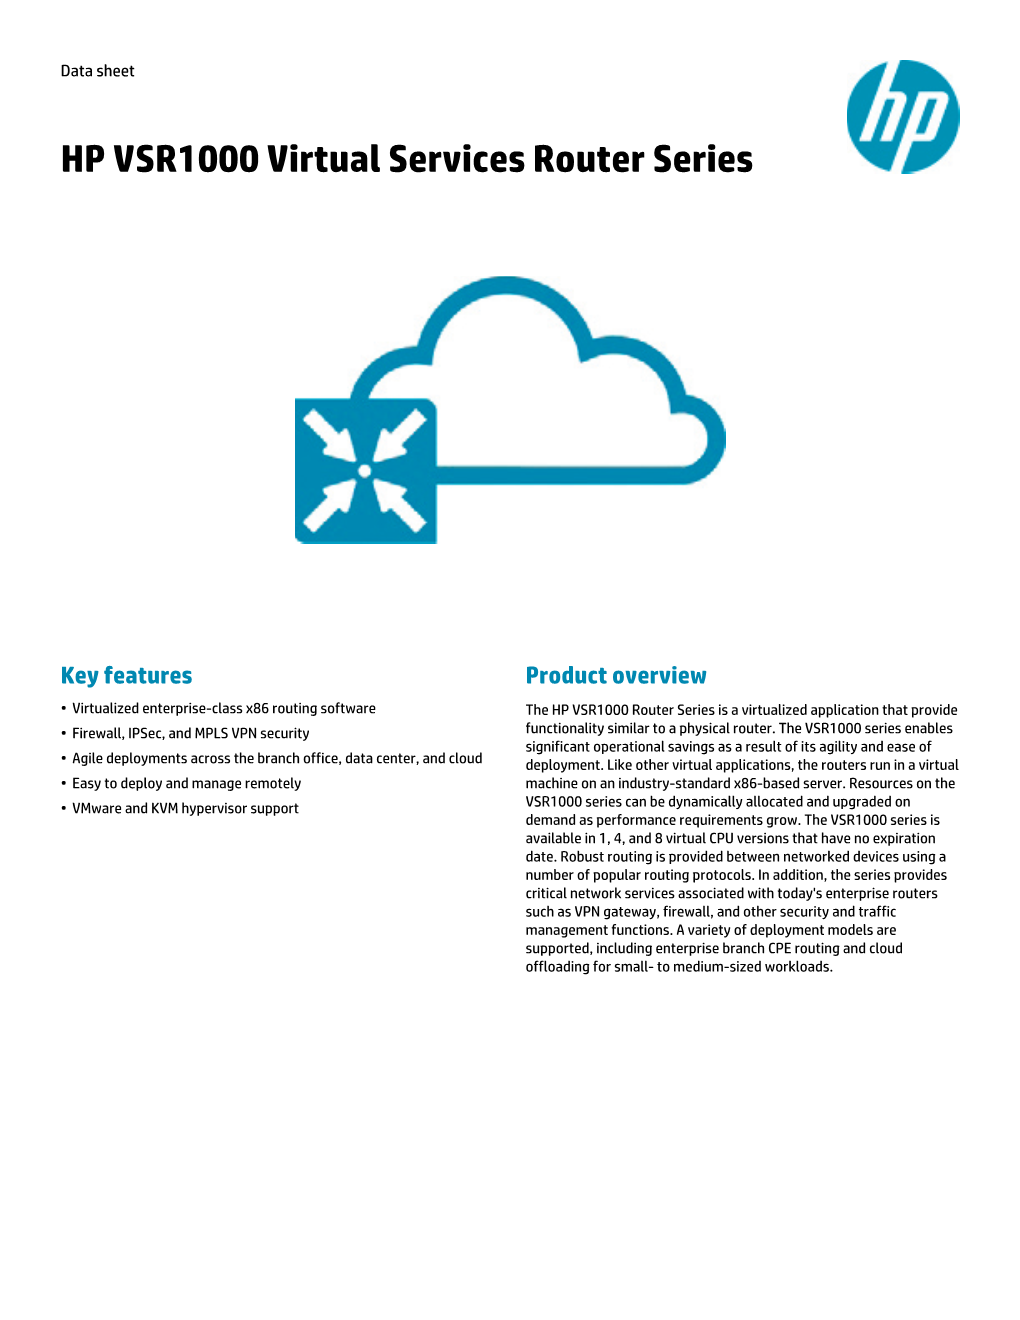 HP VSR1000 Virtual Services Router Series Data Sheet